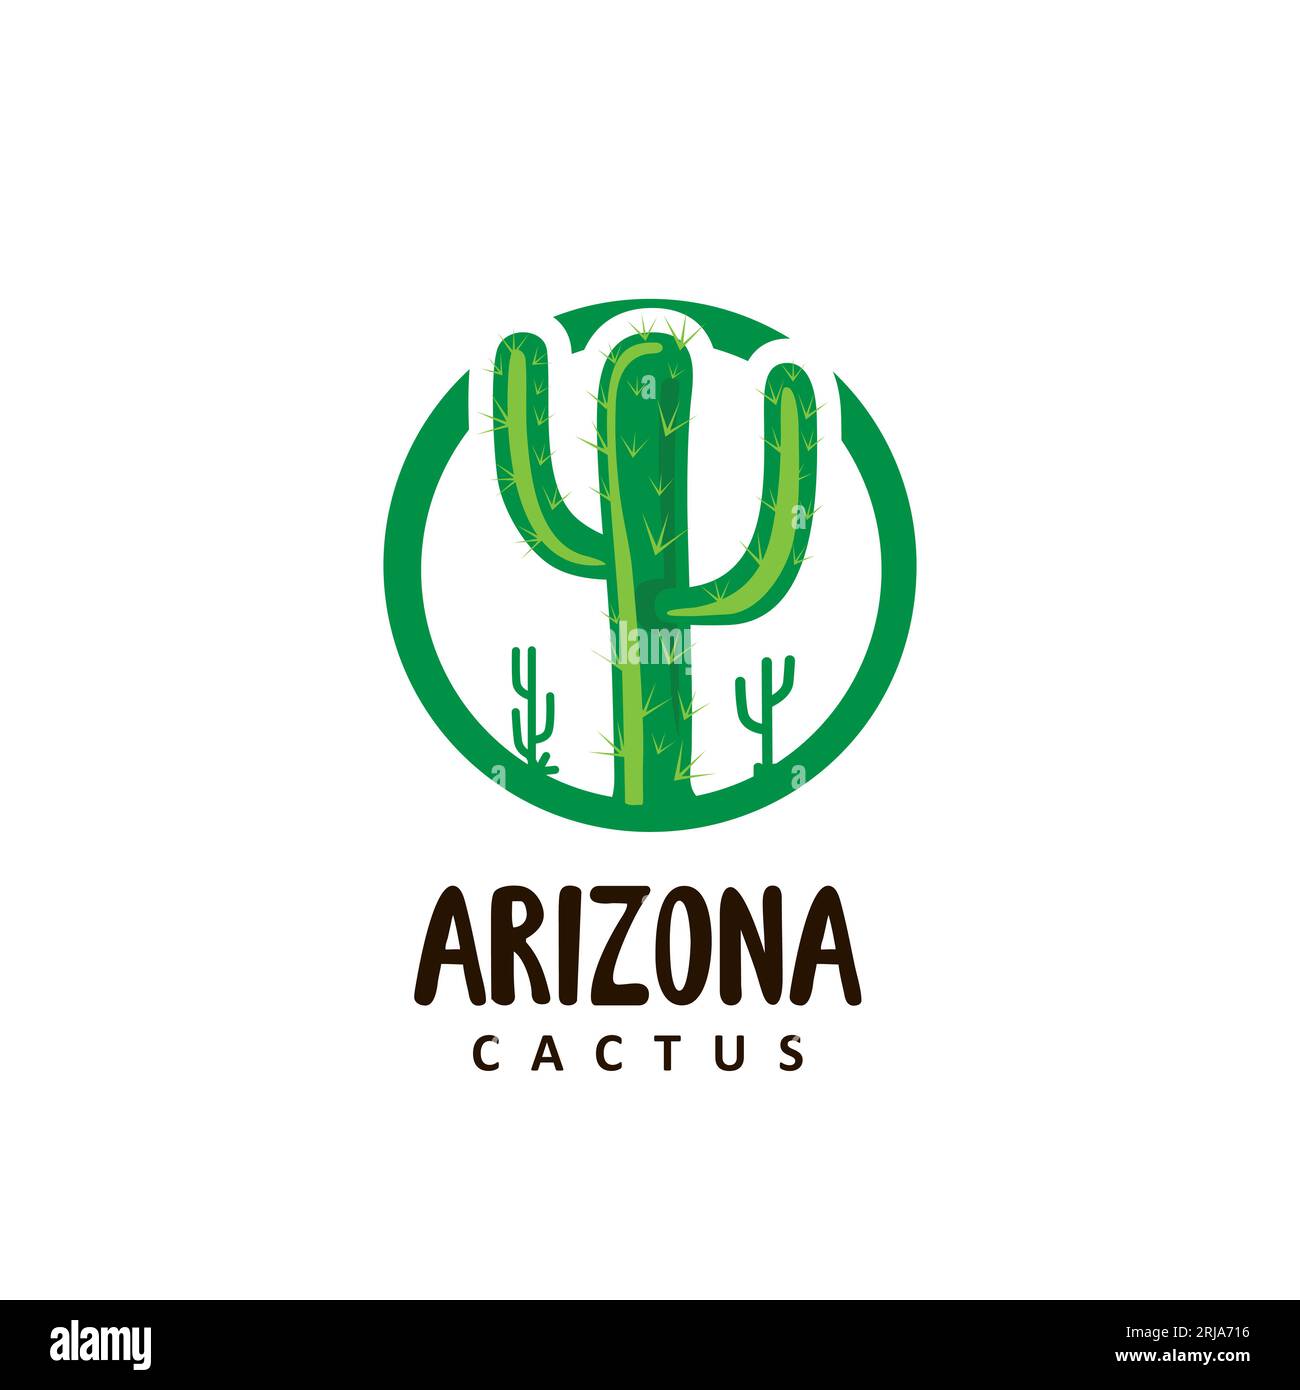 Cactus logo design vector Illustrations Stock Vector